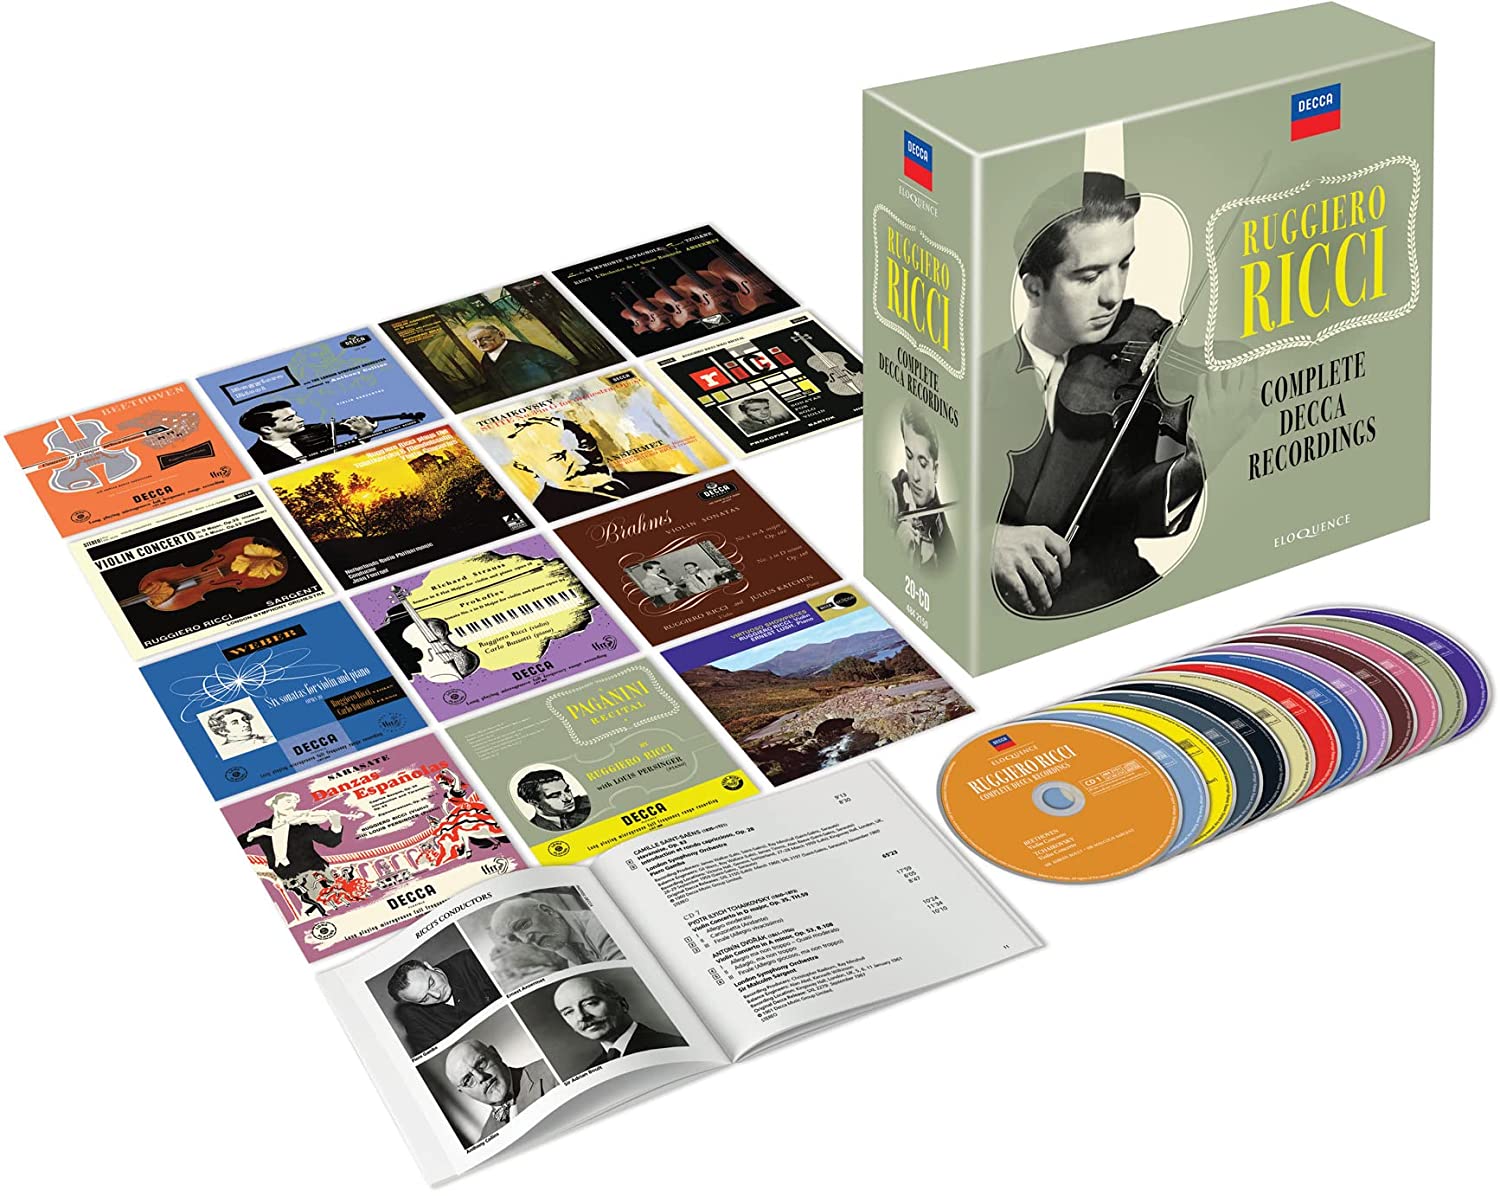 Ruggiero Ricci 루지에로 리치 데카 레코딩 전집 (Complete Decca Recordings)